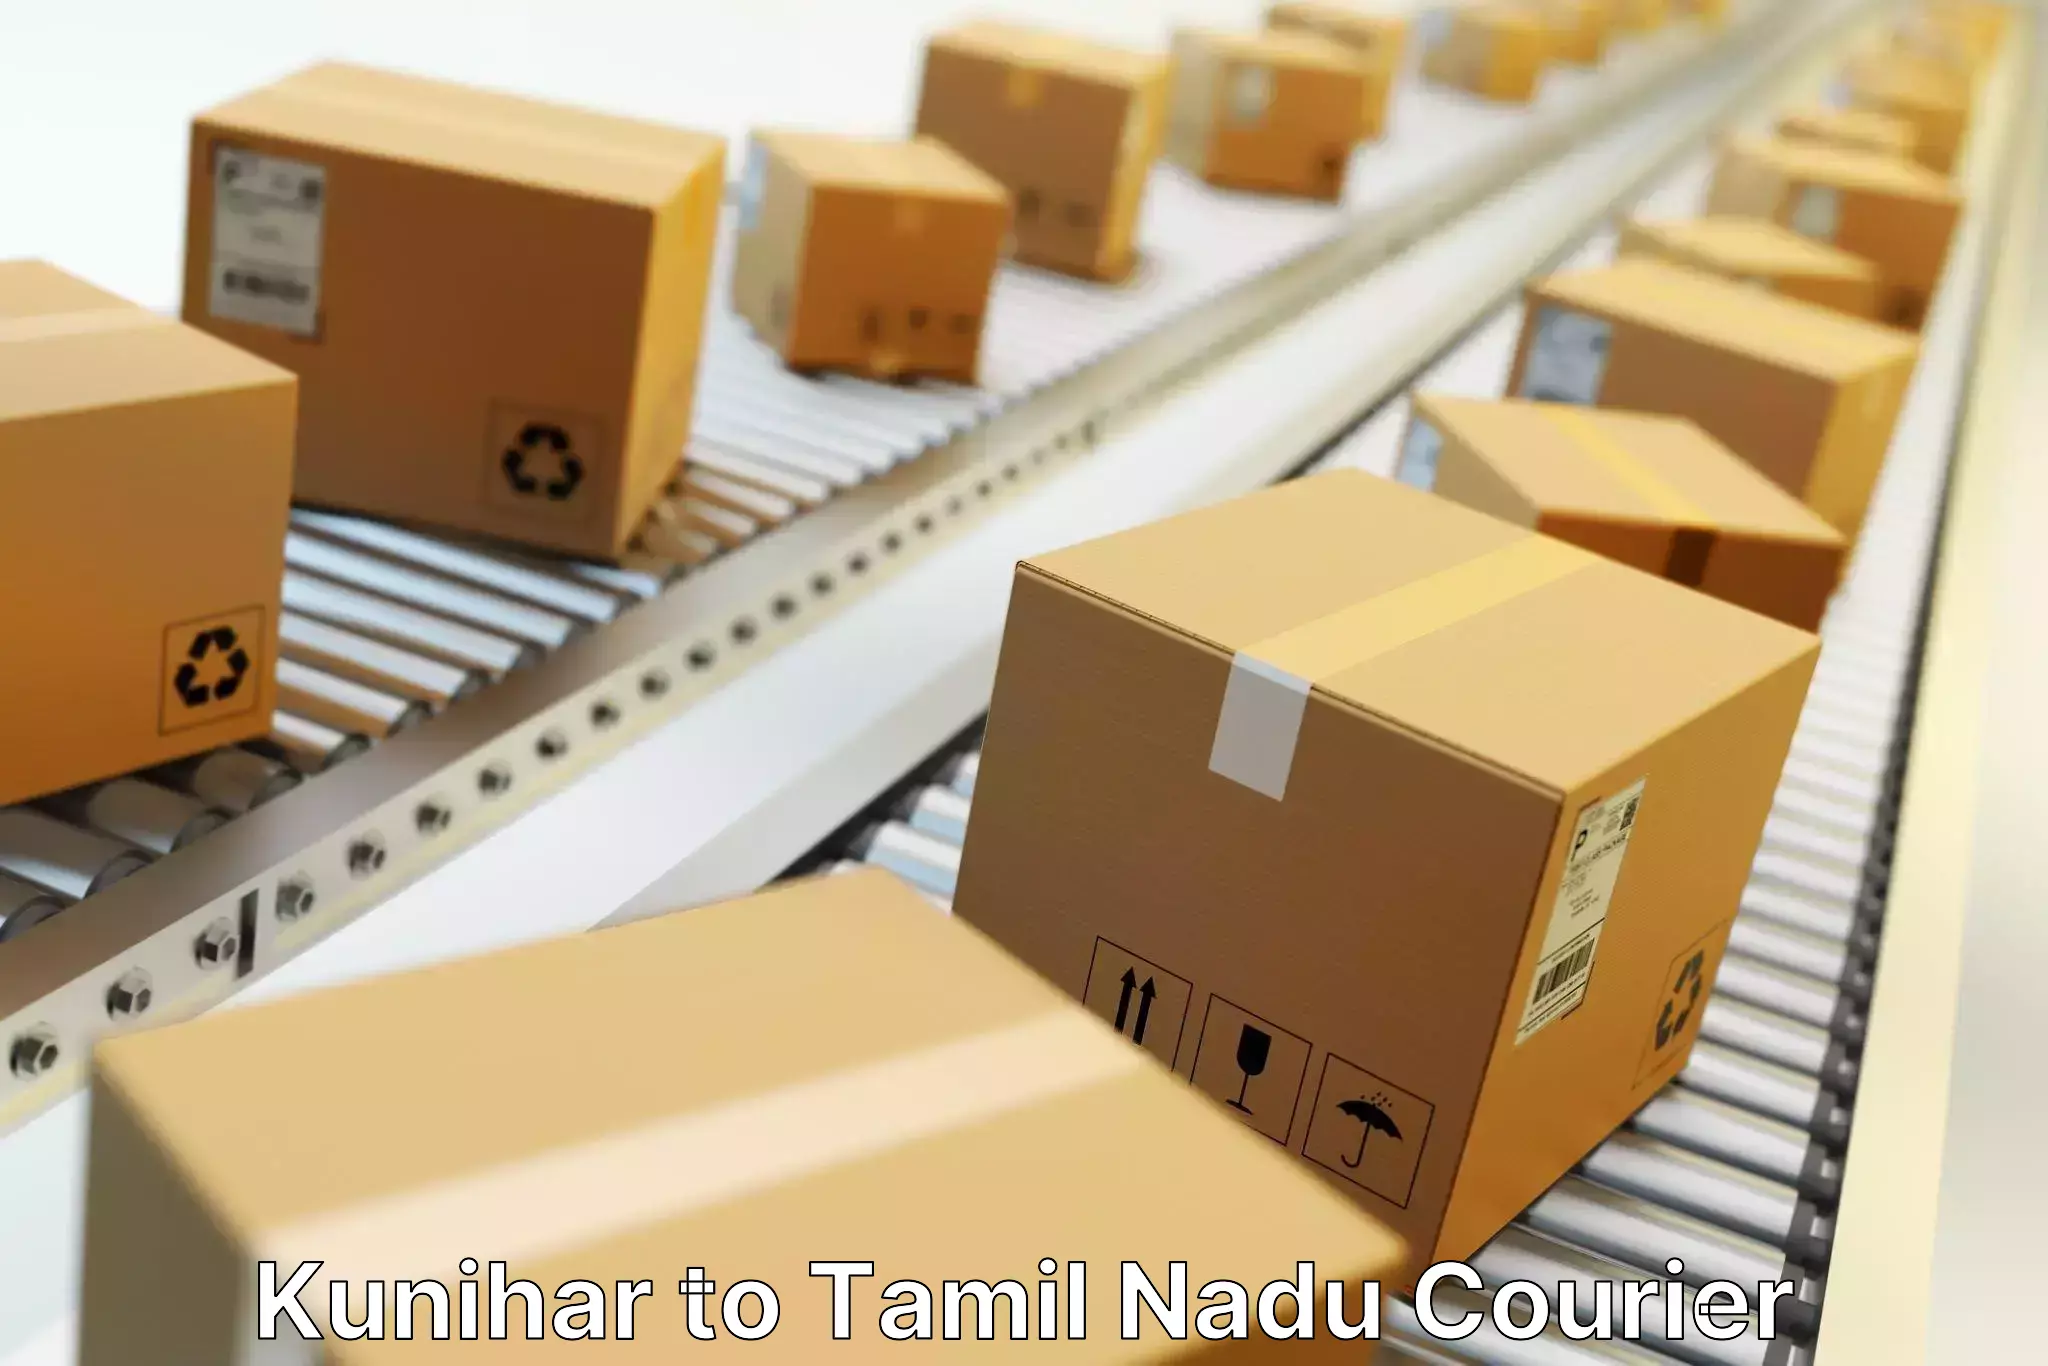 Efficient cargo handling in Kunihar to Tamil Nadu